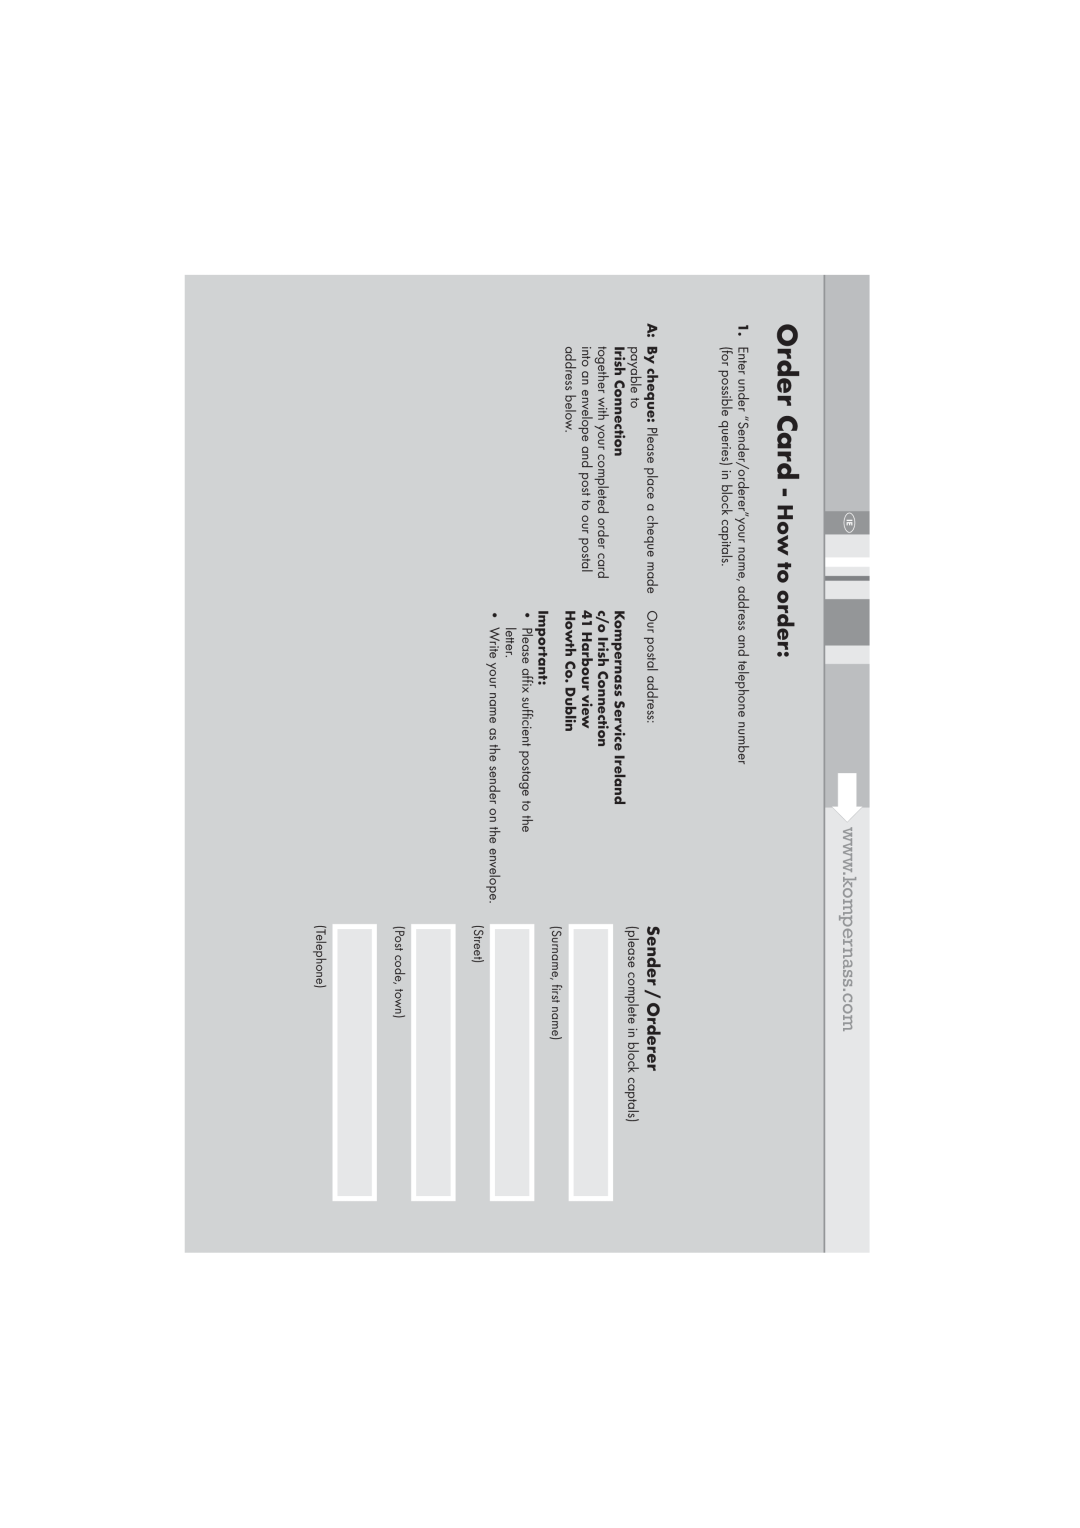 Kompernass KH 1171 manual Order Card - How to order, Sender / Orderer 